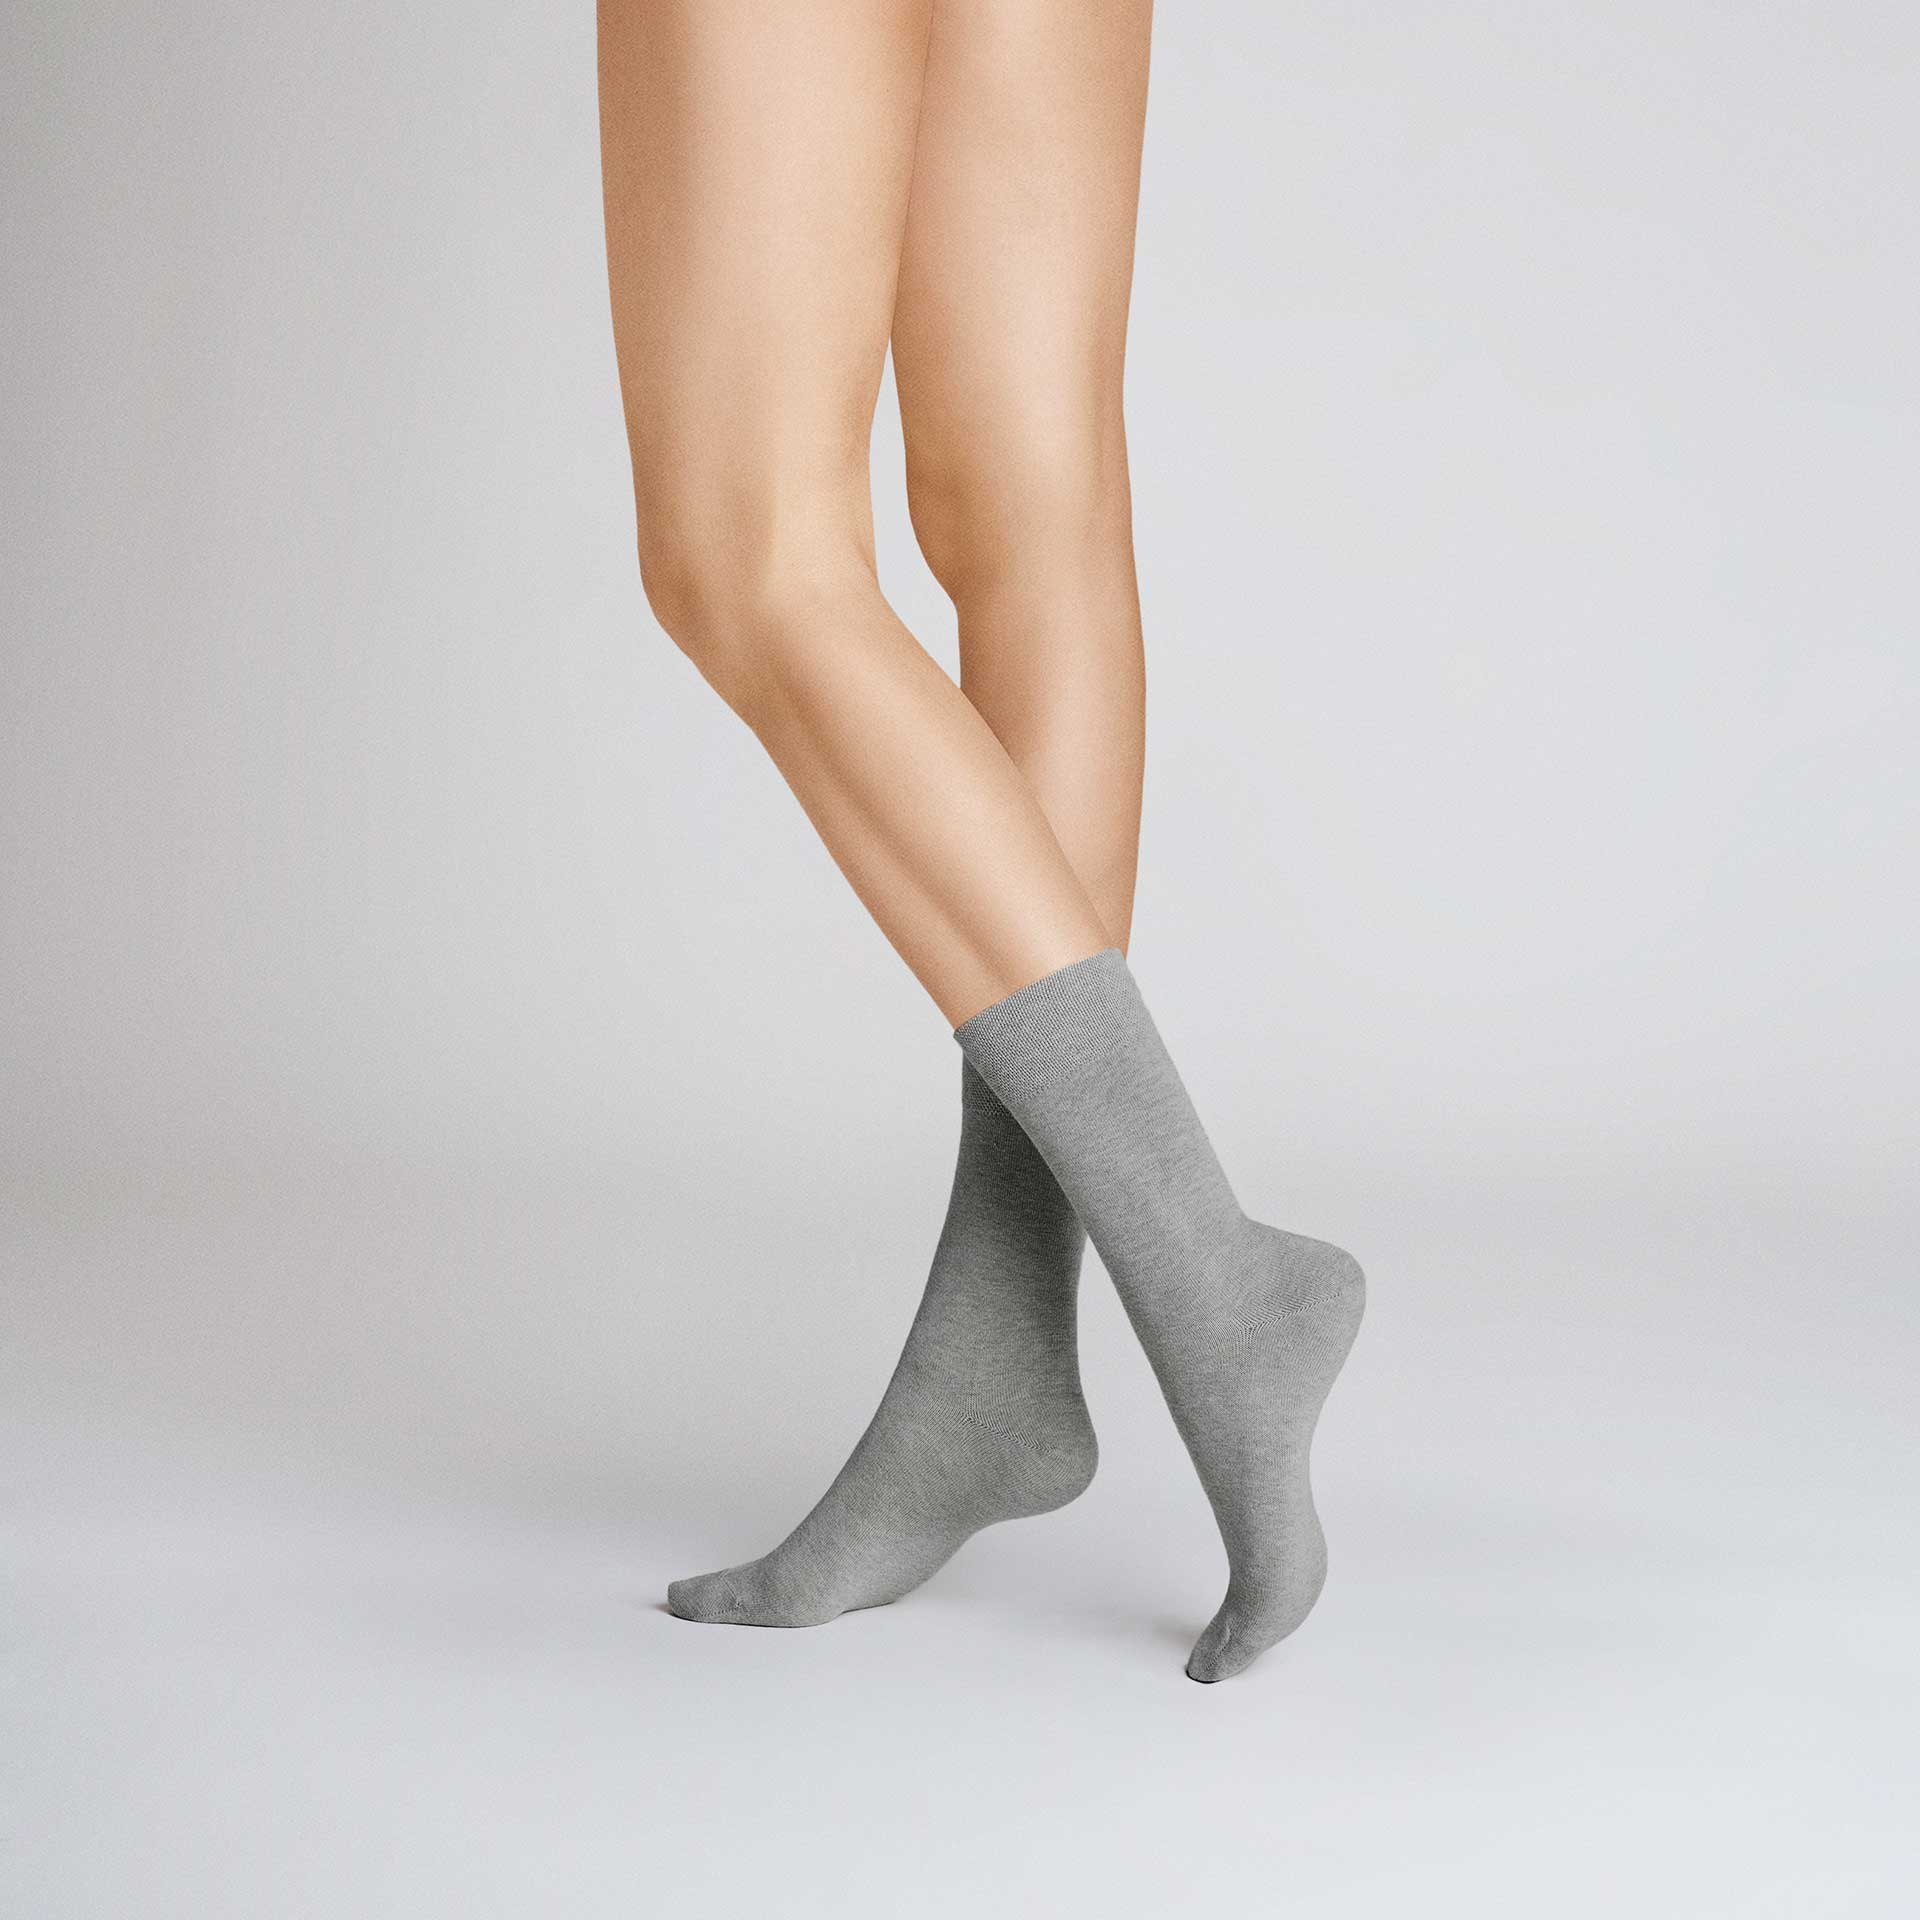 HUDSON Damen RELAX COTTON     -  35/38 - Socken aus 97% Baumwolle - Silber (Grau)